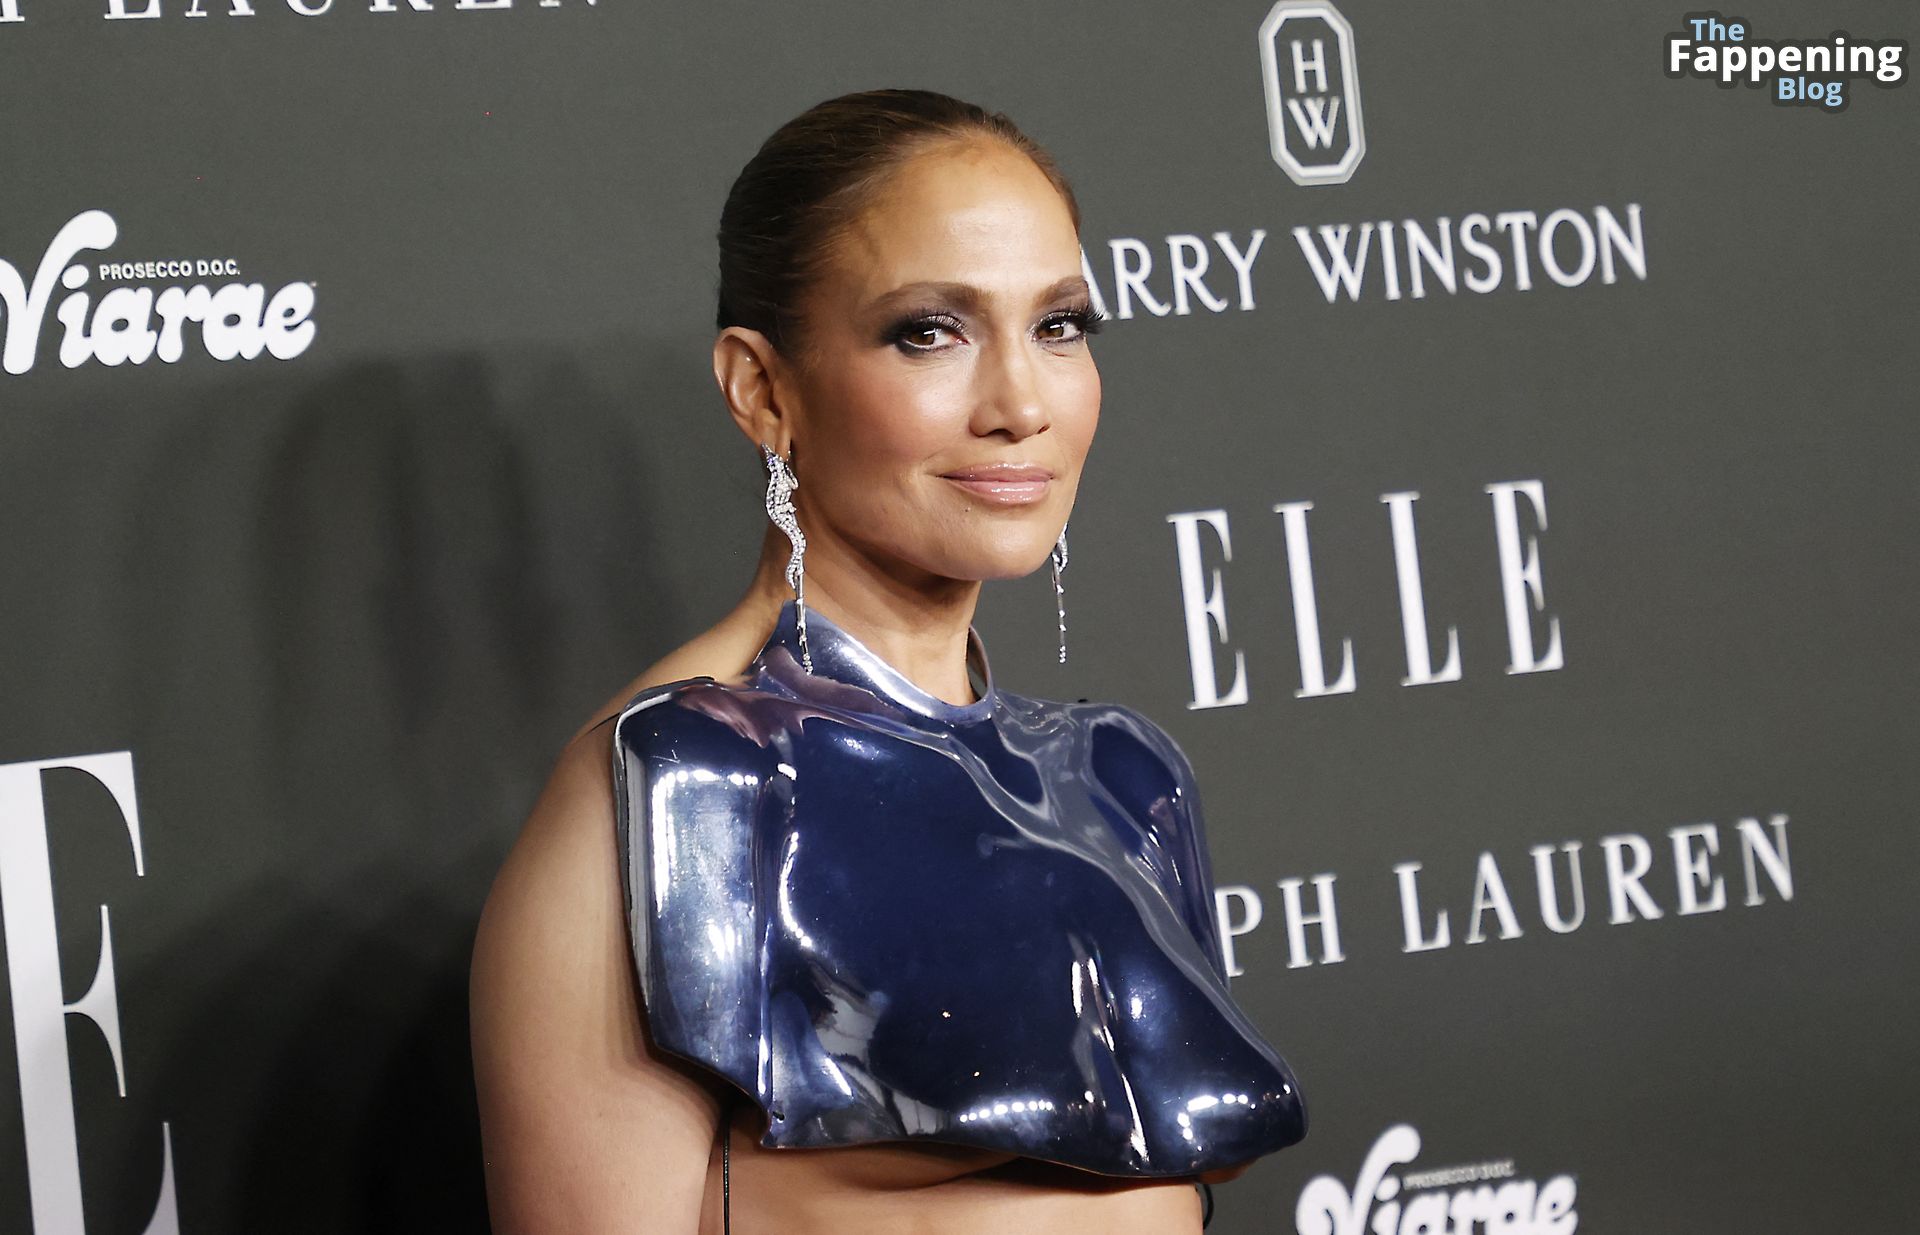 Jennifer-Lopez-Sexy-63-The-Fappening-Blog.jpg